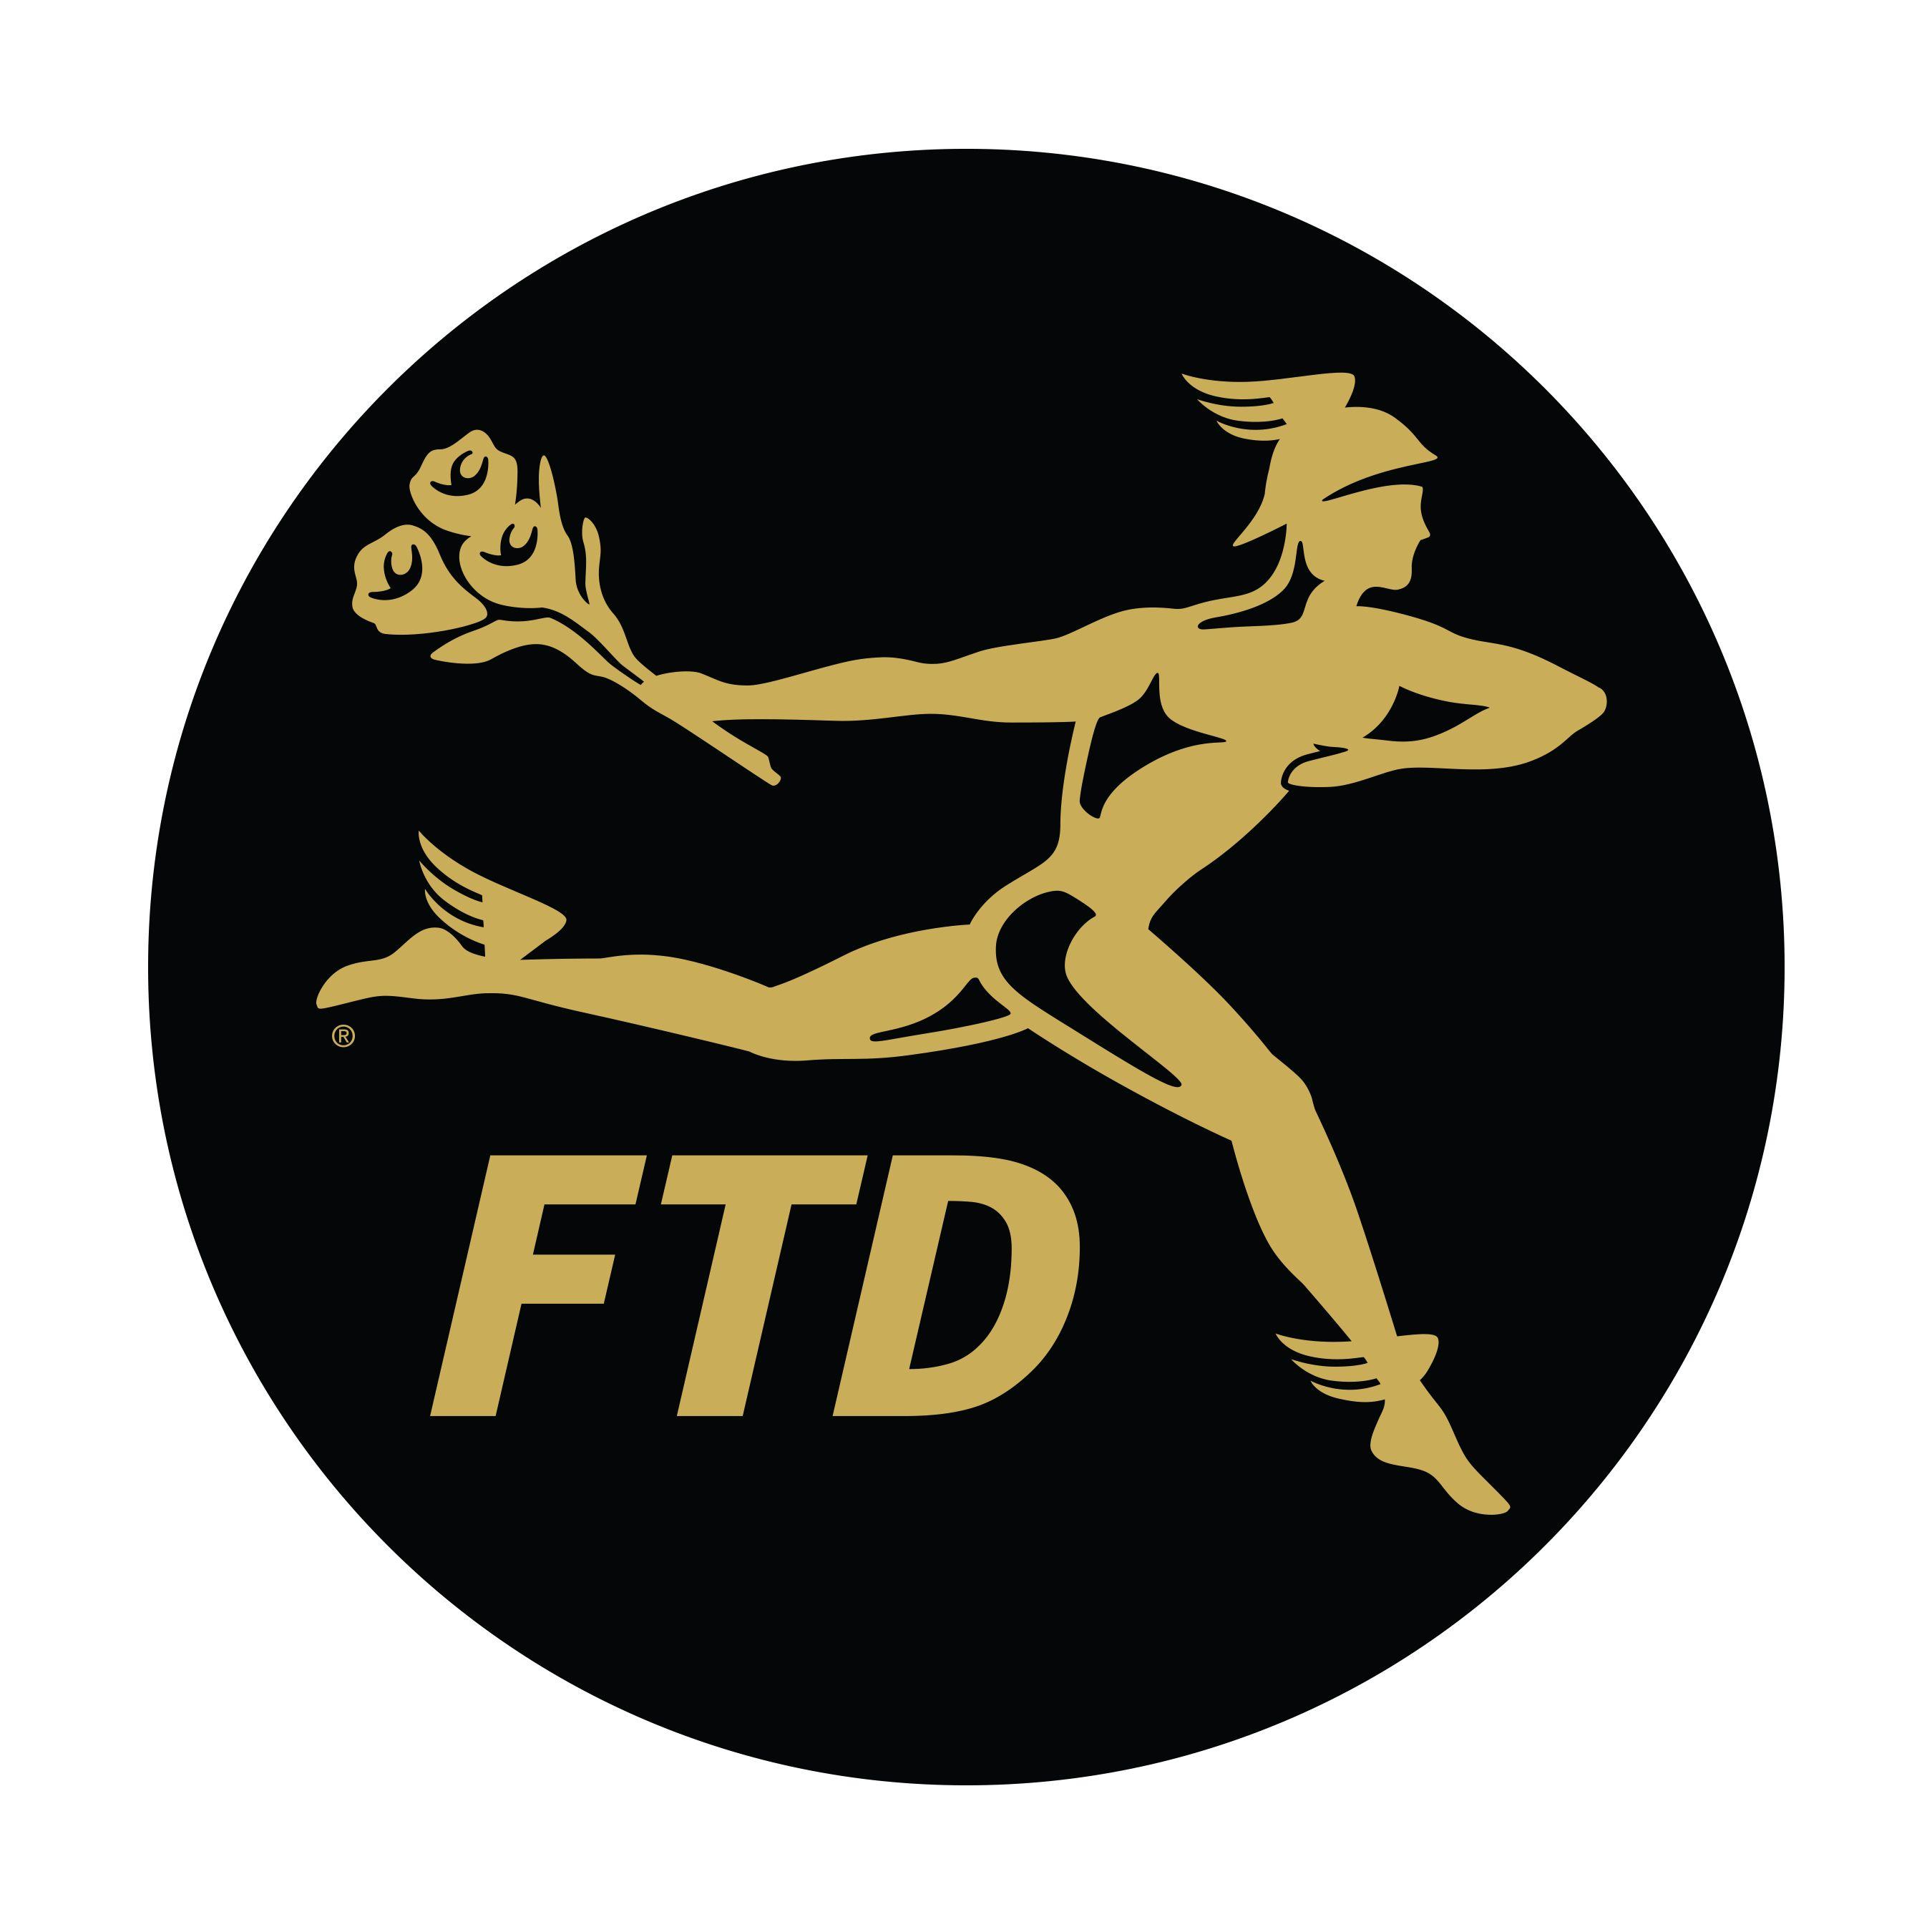 FTD Florist Logo - Ftd florist Logos